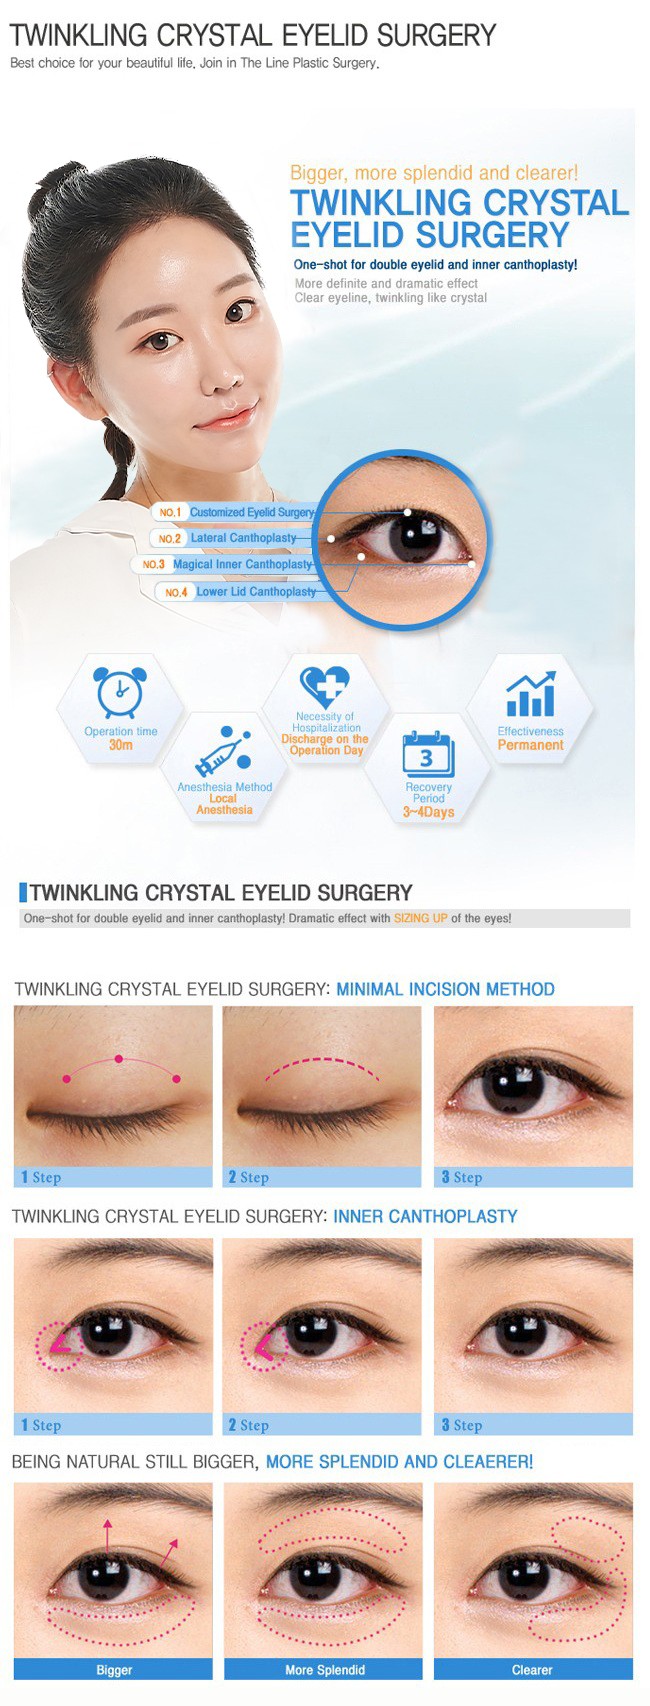 Under eye fat repositioning to remove eye bags - Hyundai Aesthetics Blog